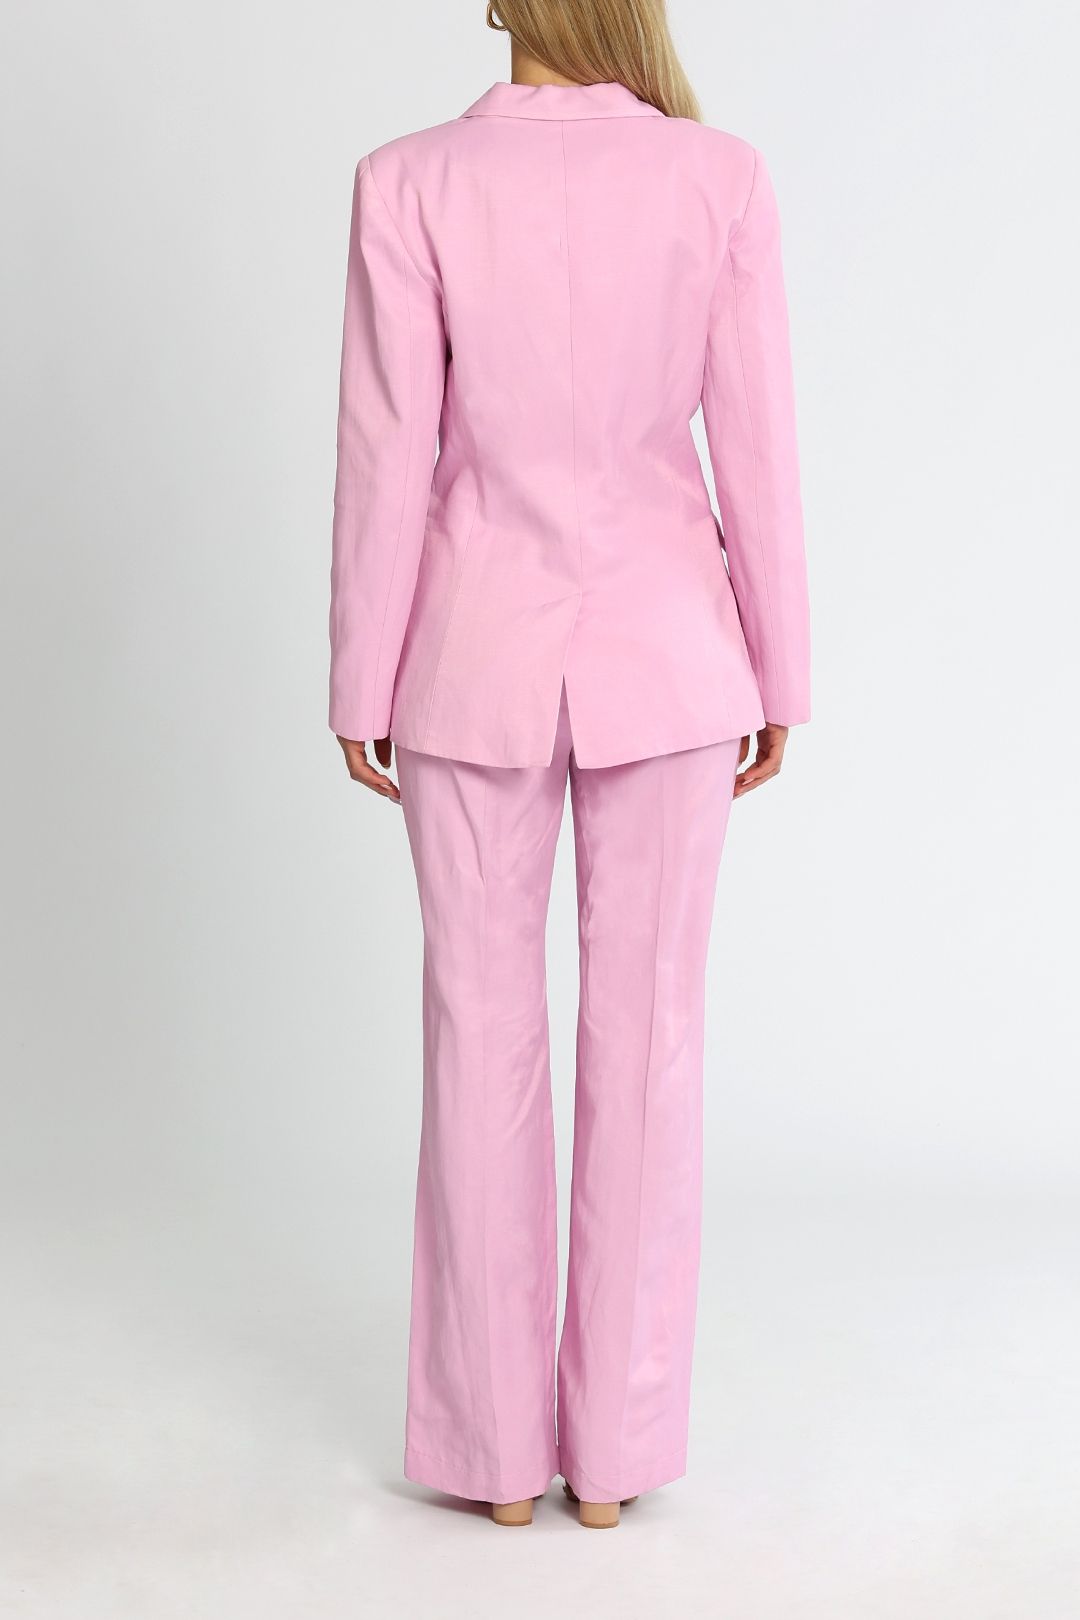 Hire Priscilla Suit Jacket and Pant - Fairy Floss | Setre | GlamCorner